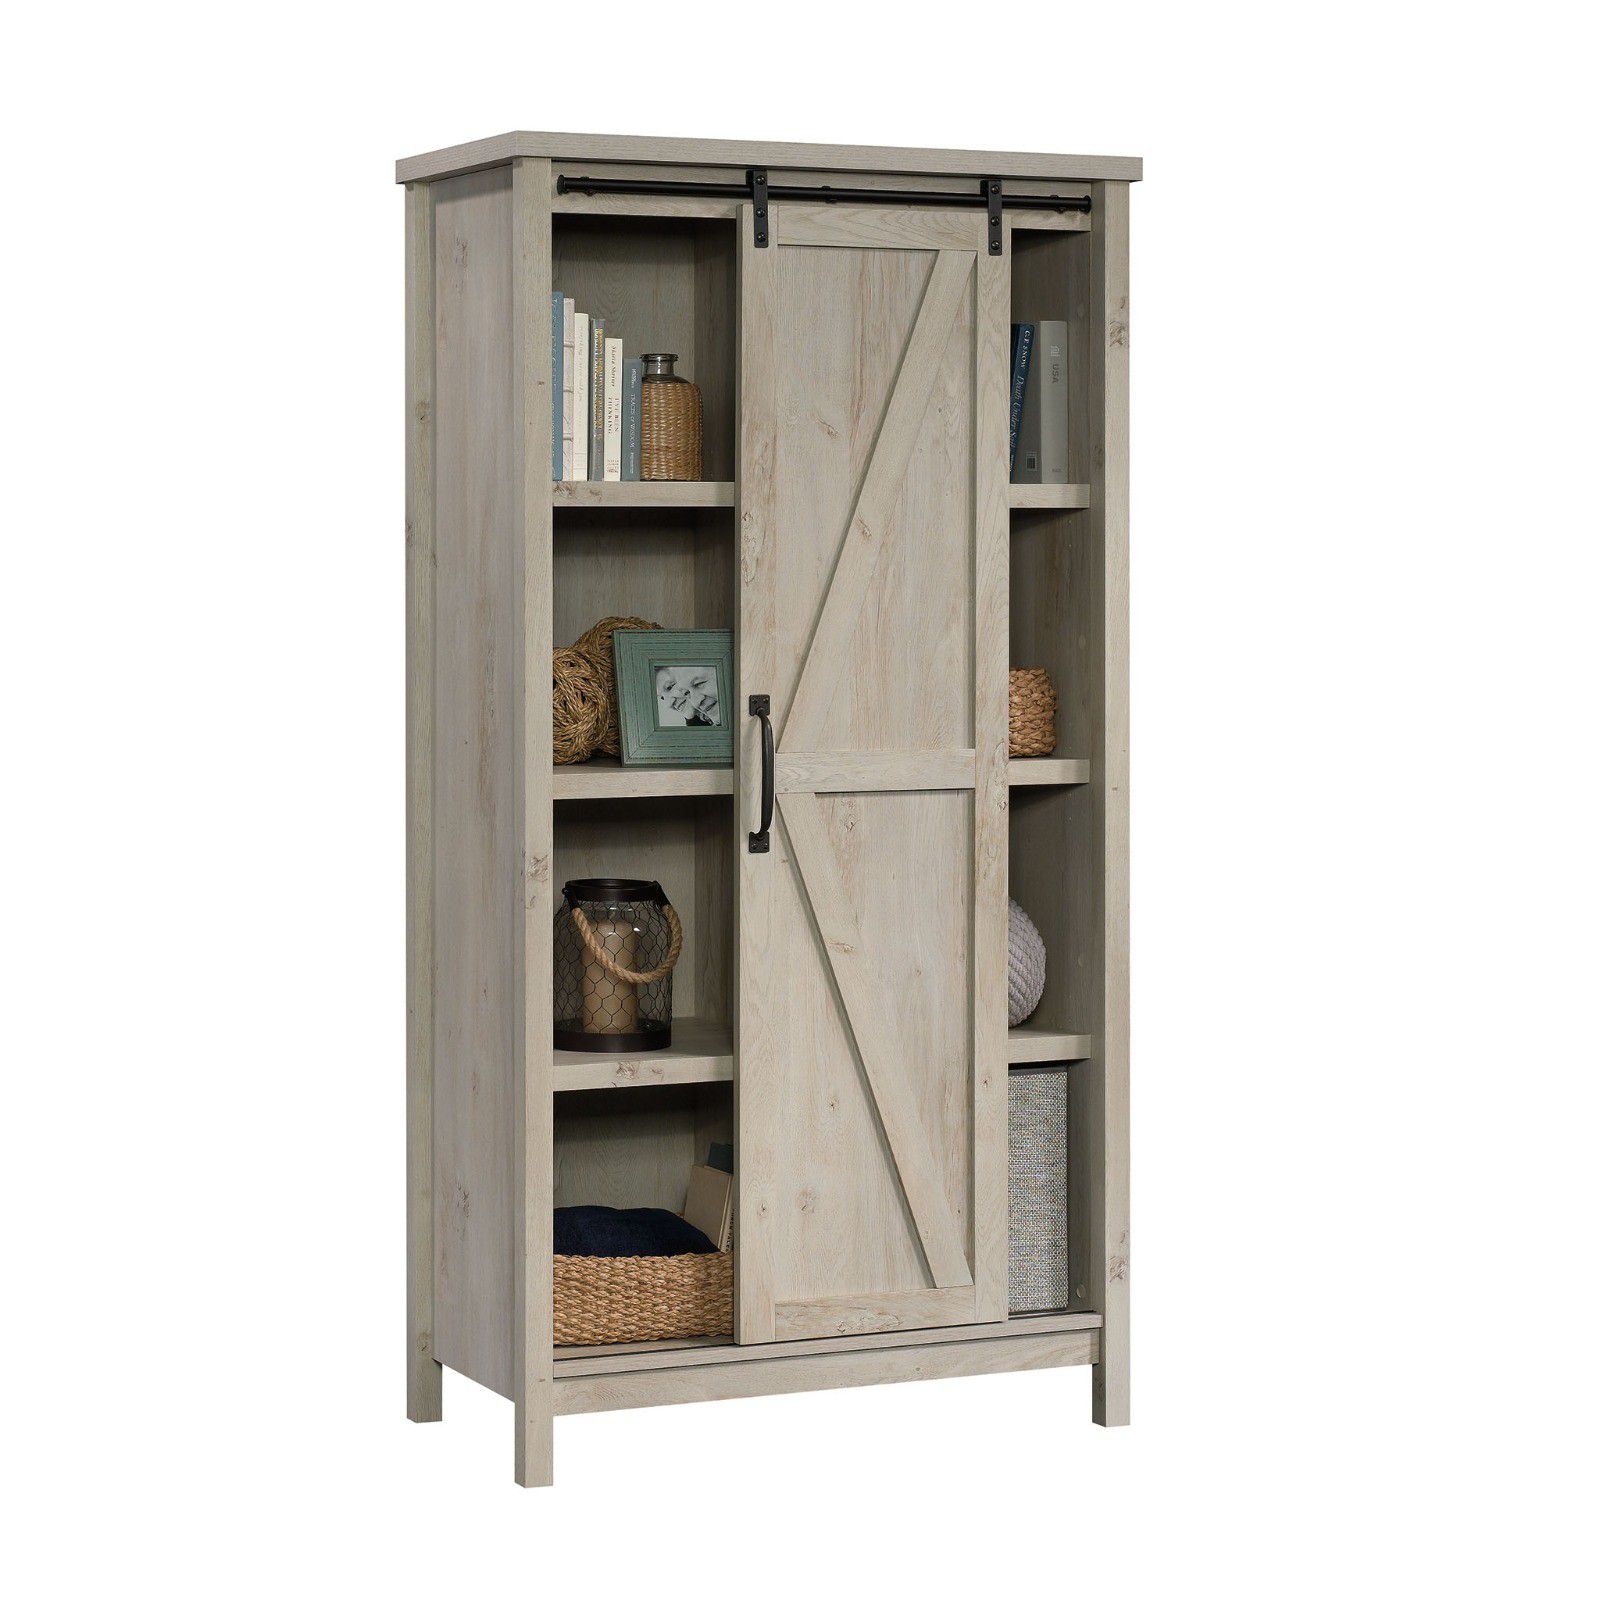 ❤Better Homes & Gardens 66" Modern Farmhouse Bookcase Storage Cabinet, Rustic White Finish